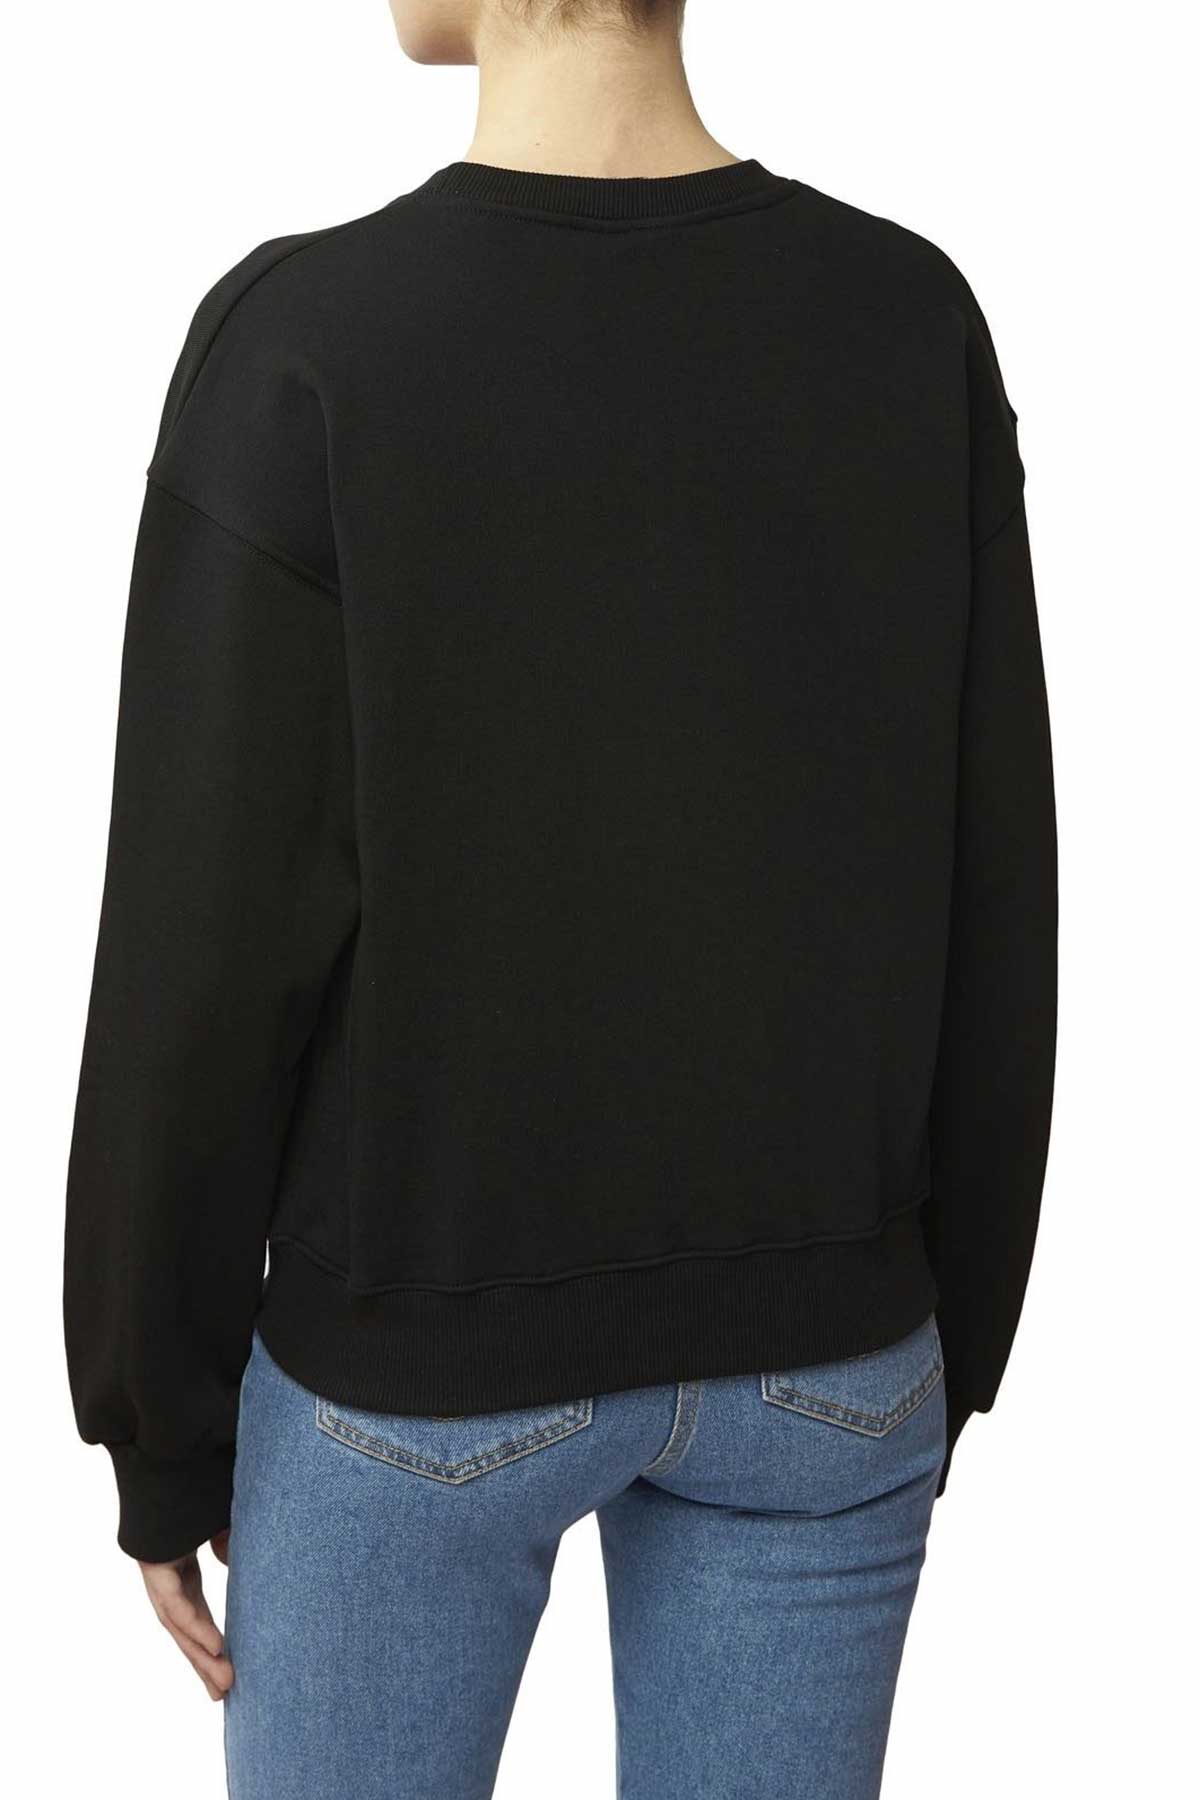 Chiara Ferragni Winking Eye Sweatshirt-Libas Trendy Fashion Store